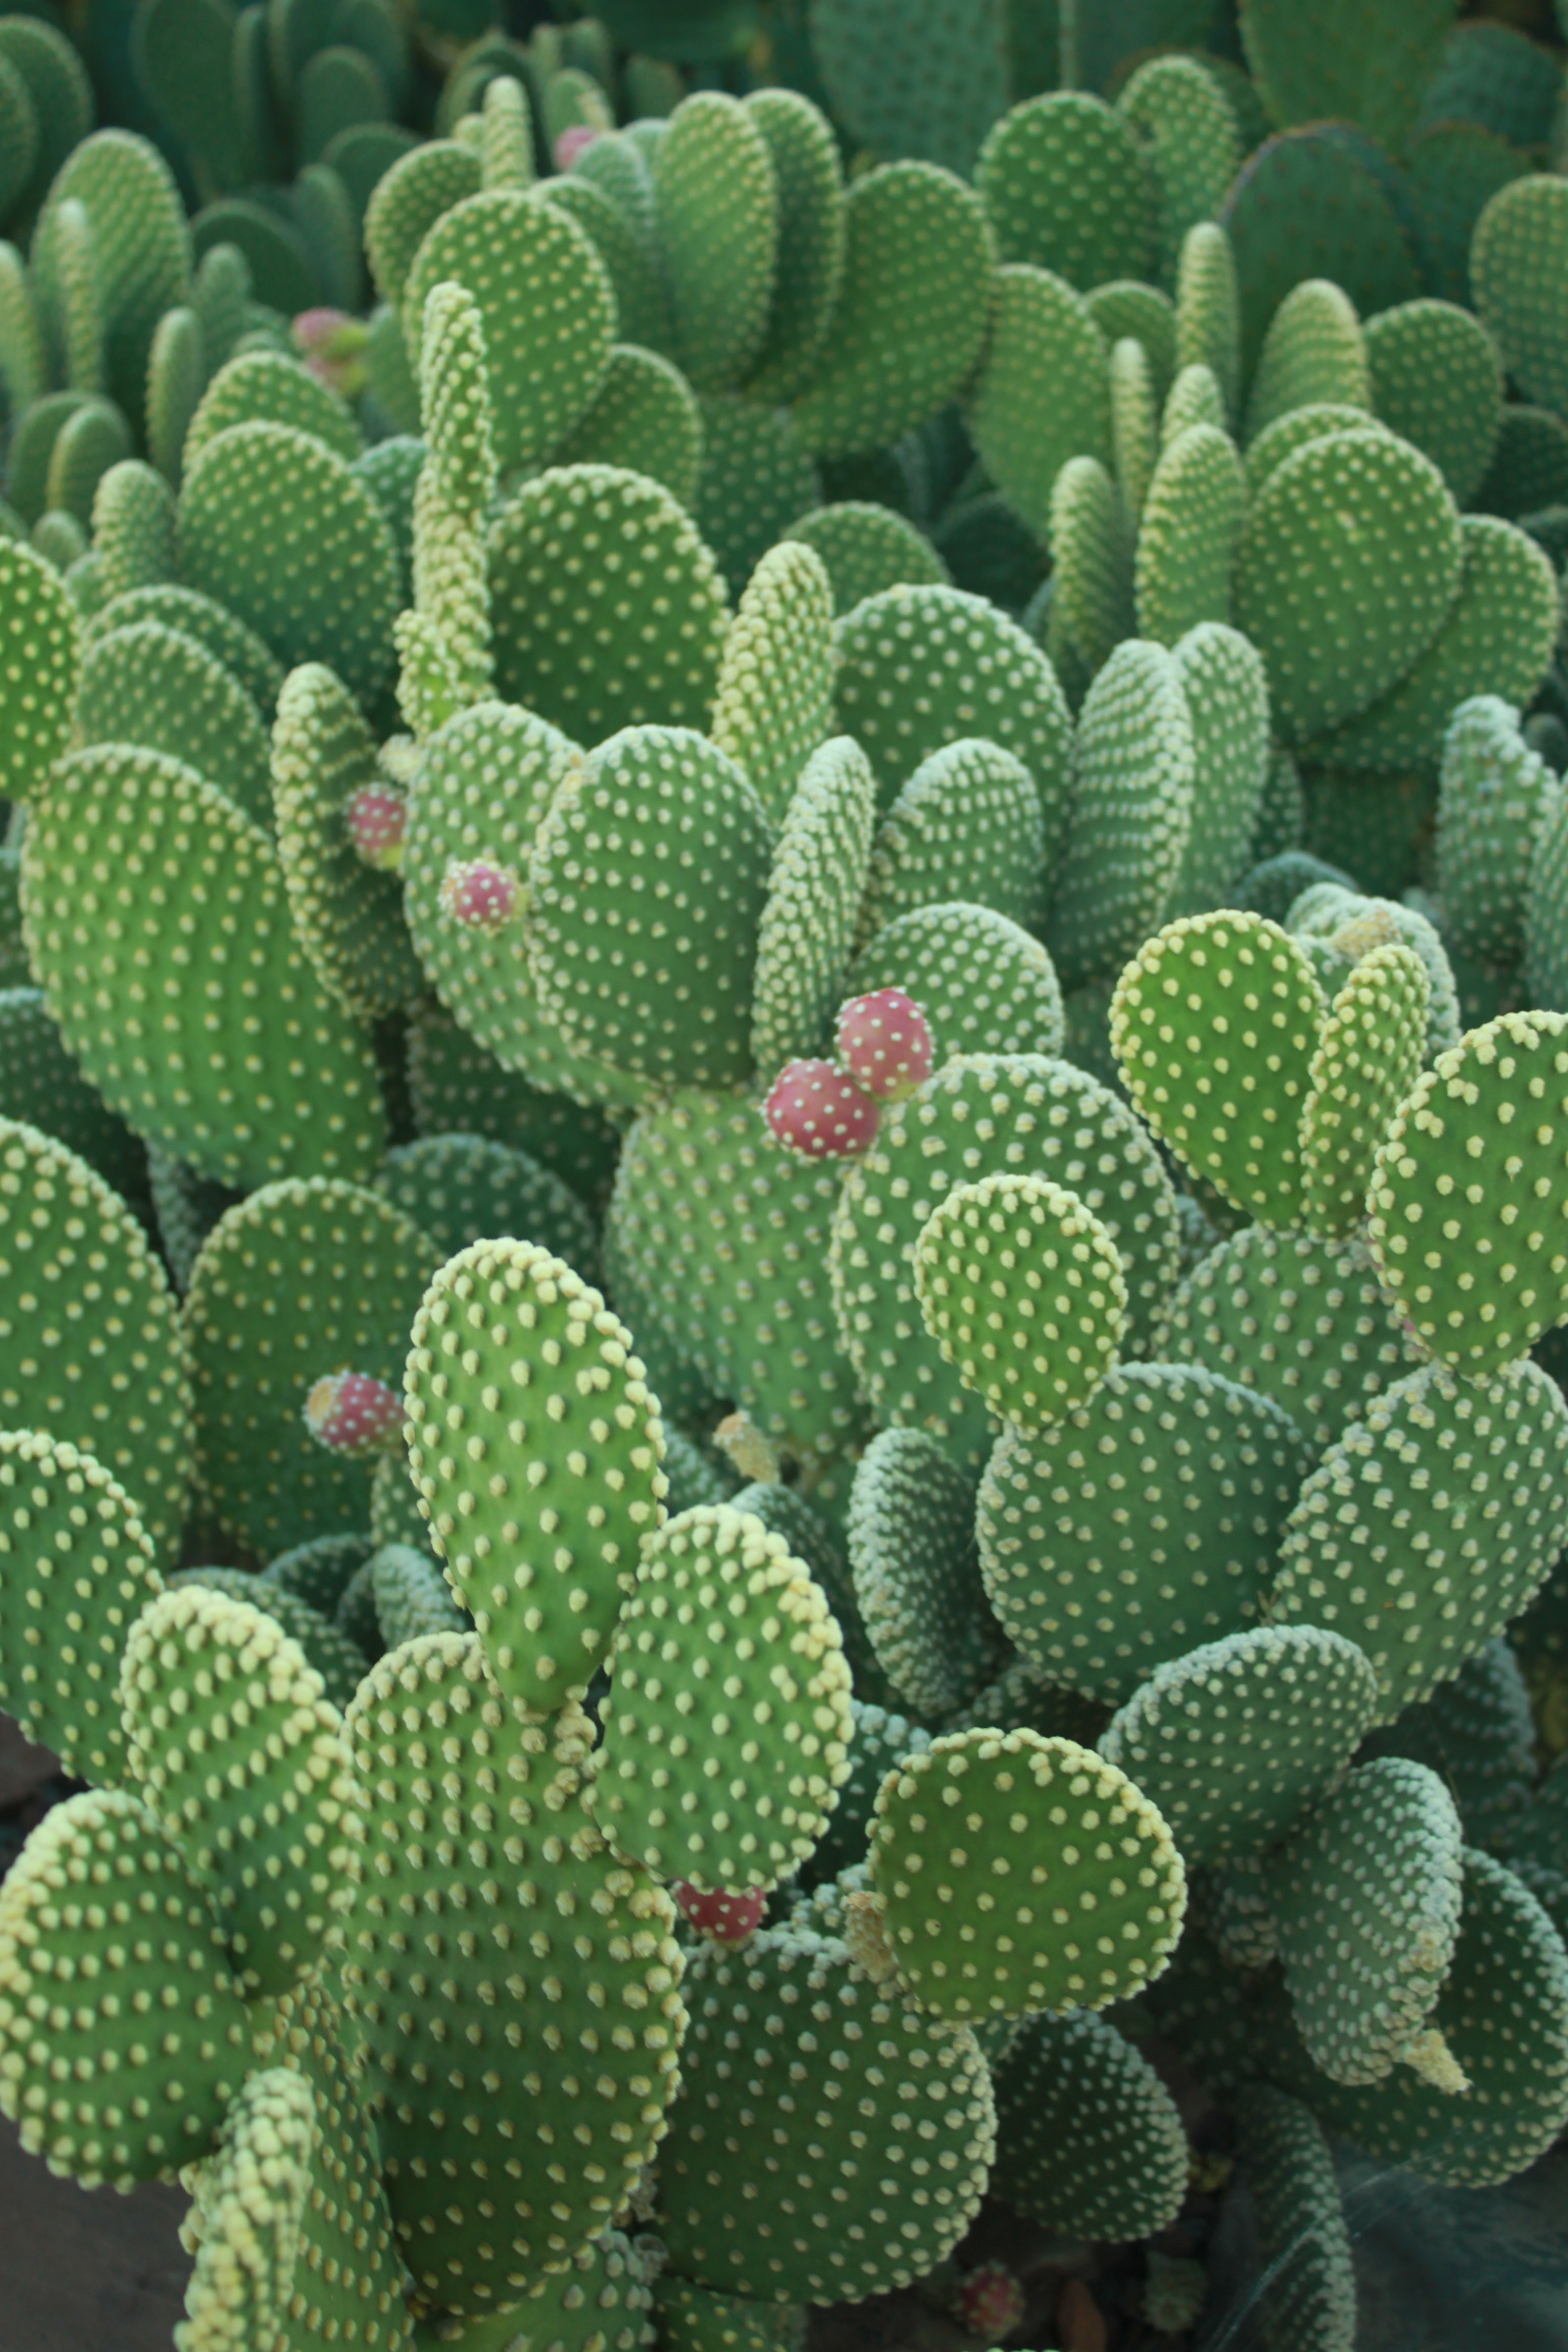 Cacti at the Arizona Botanical Garden | Gardening | Pinterest ...